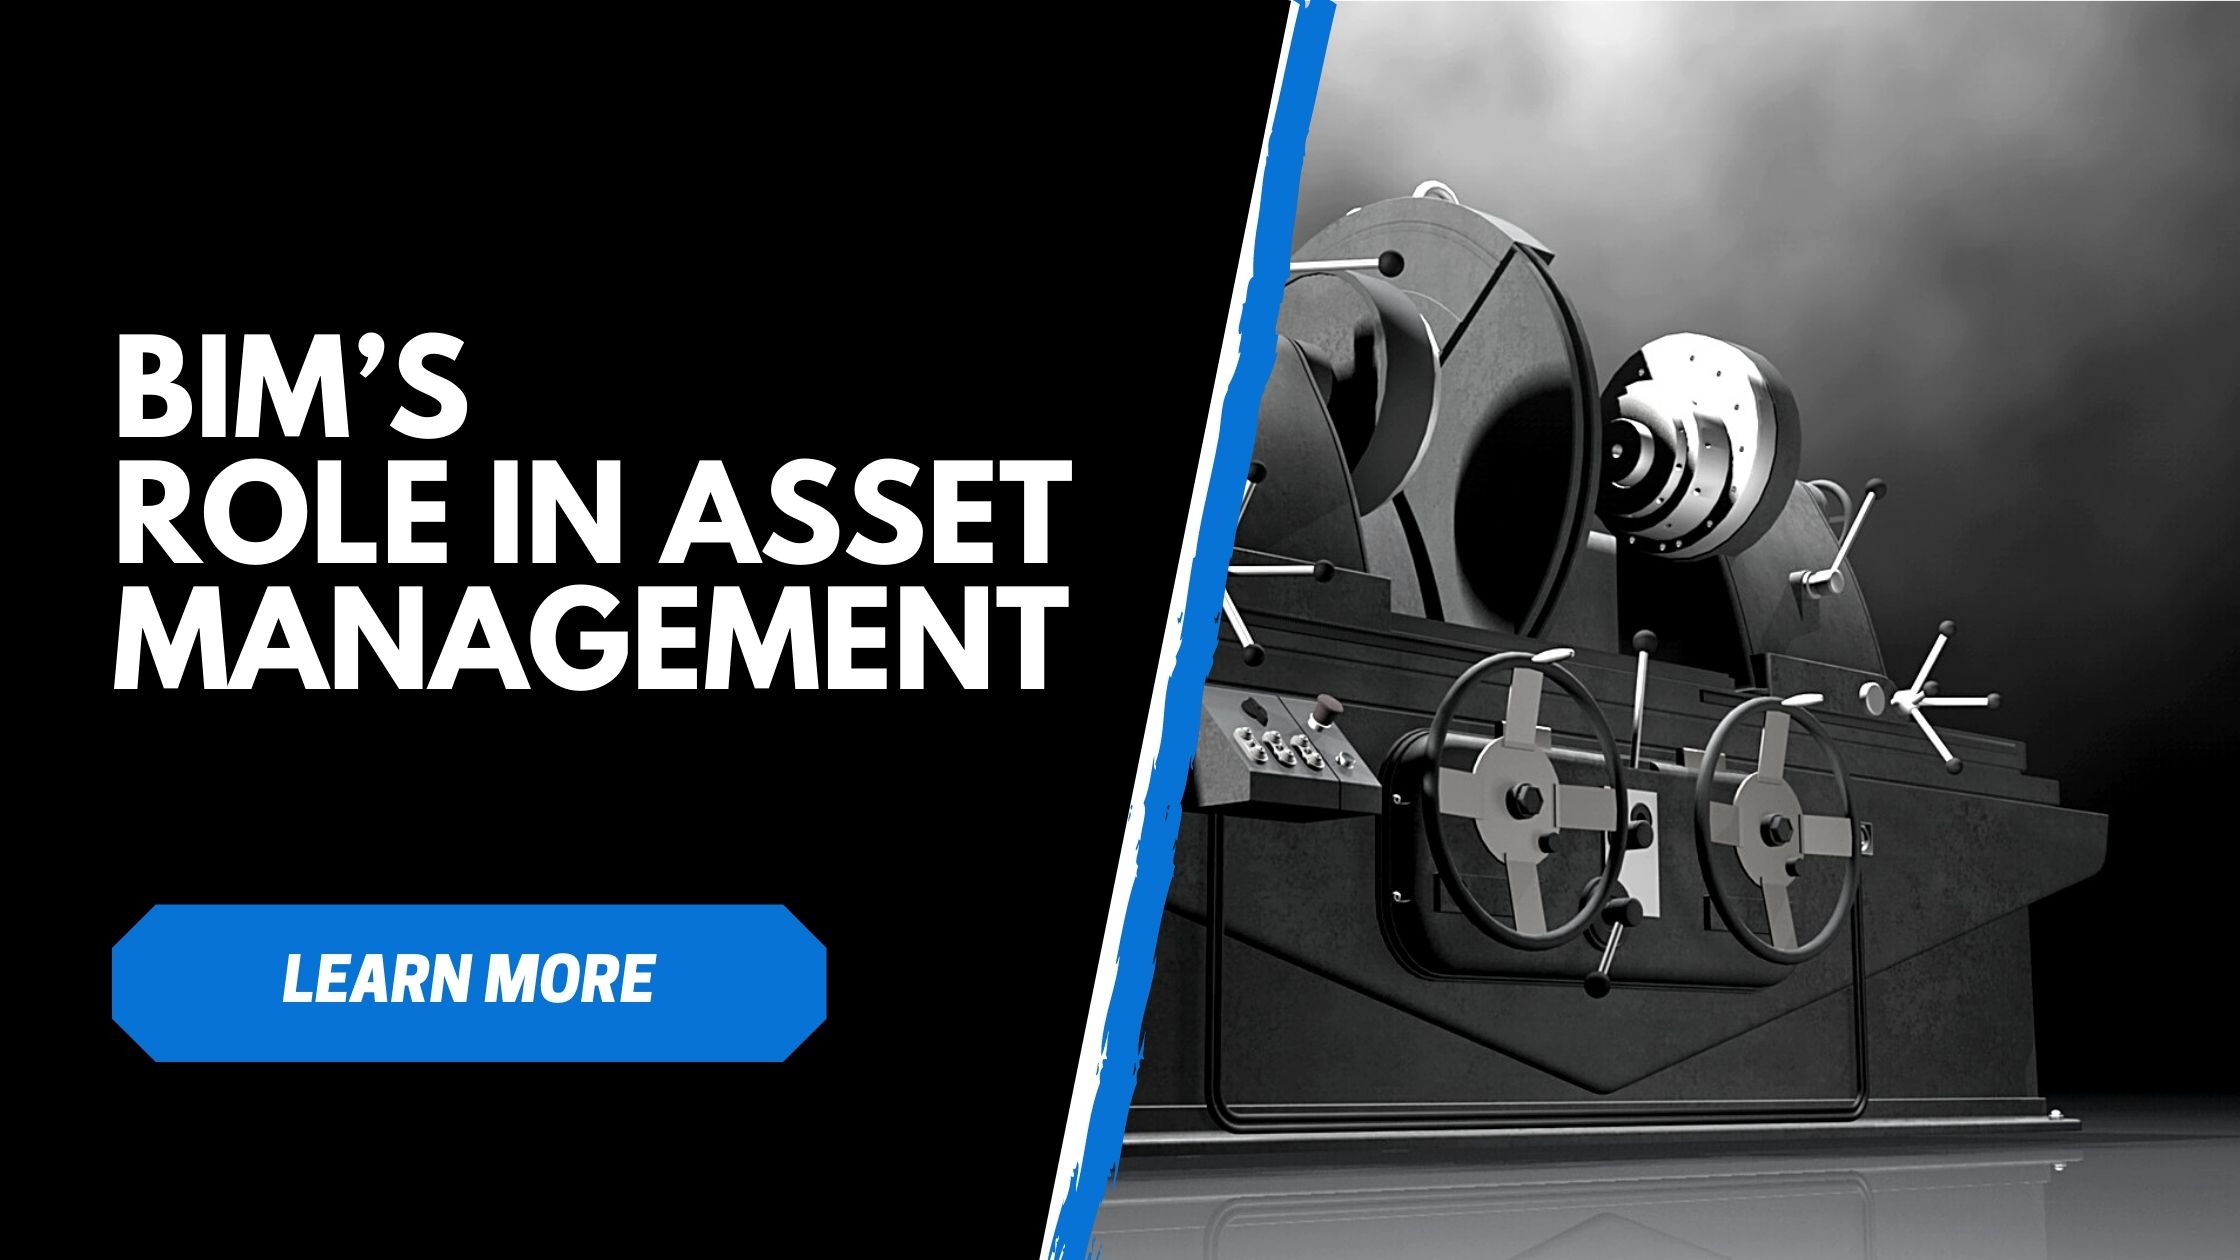 BIM’s Role in Asset Management